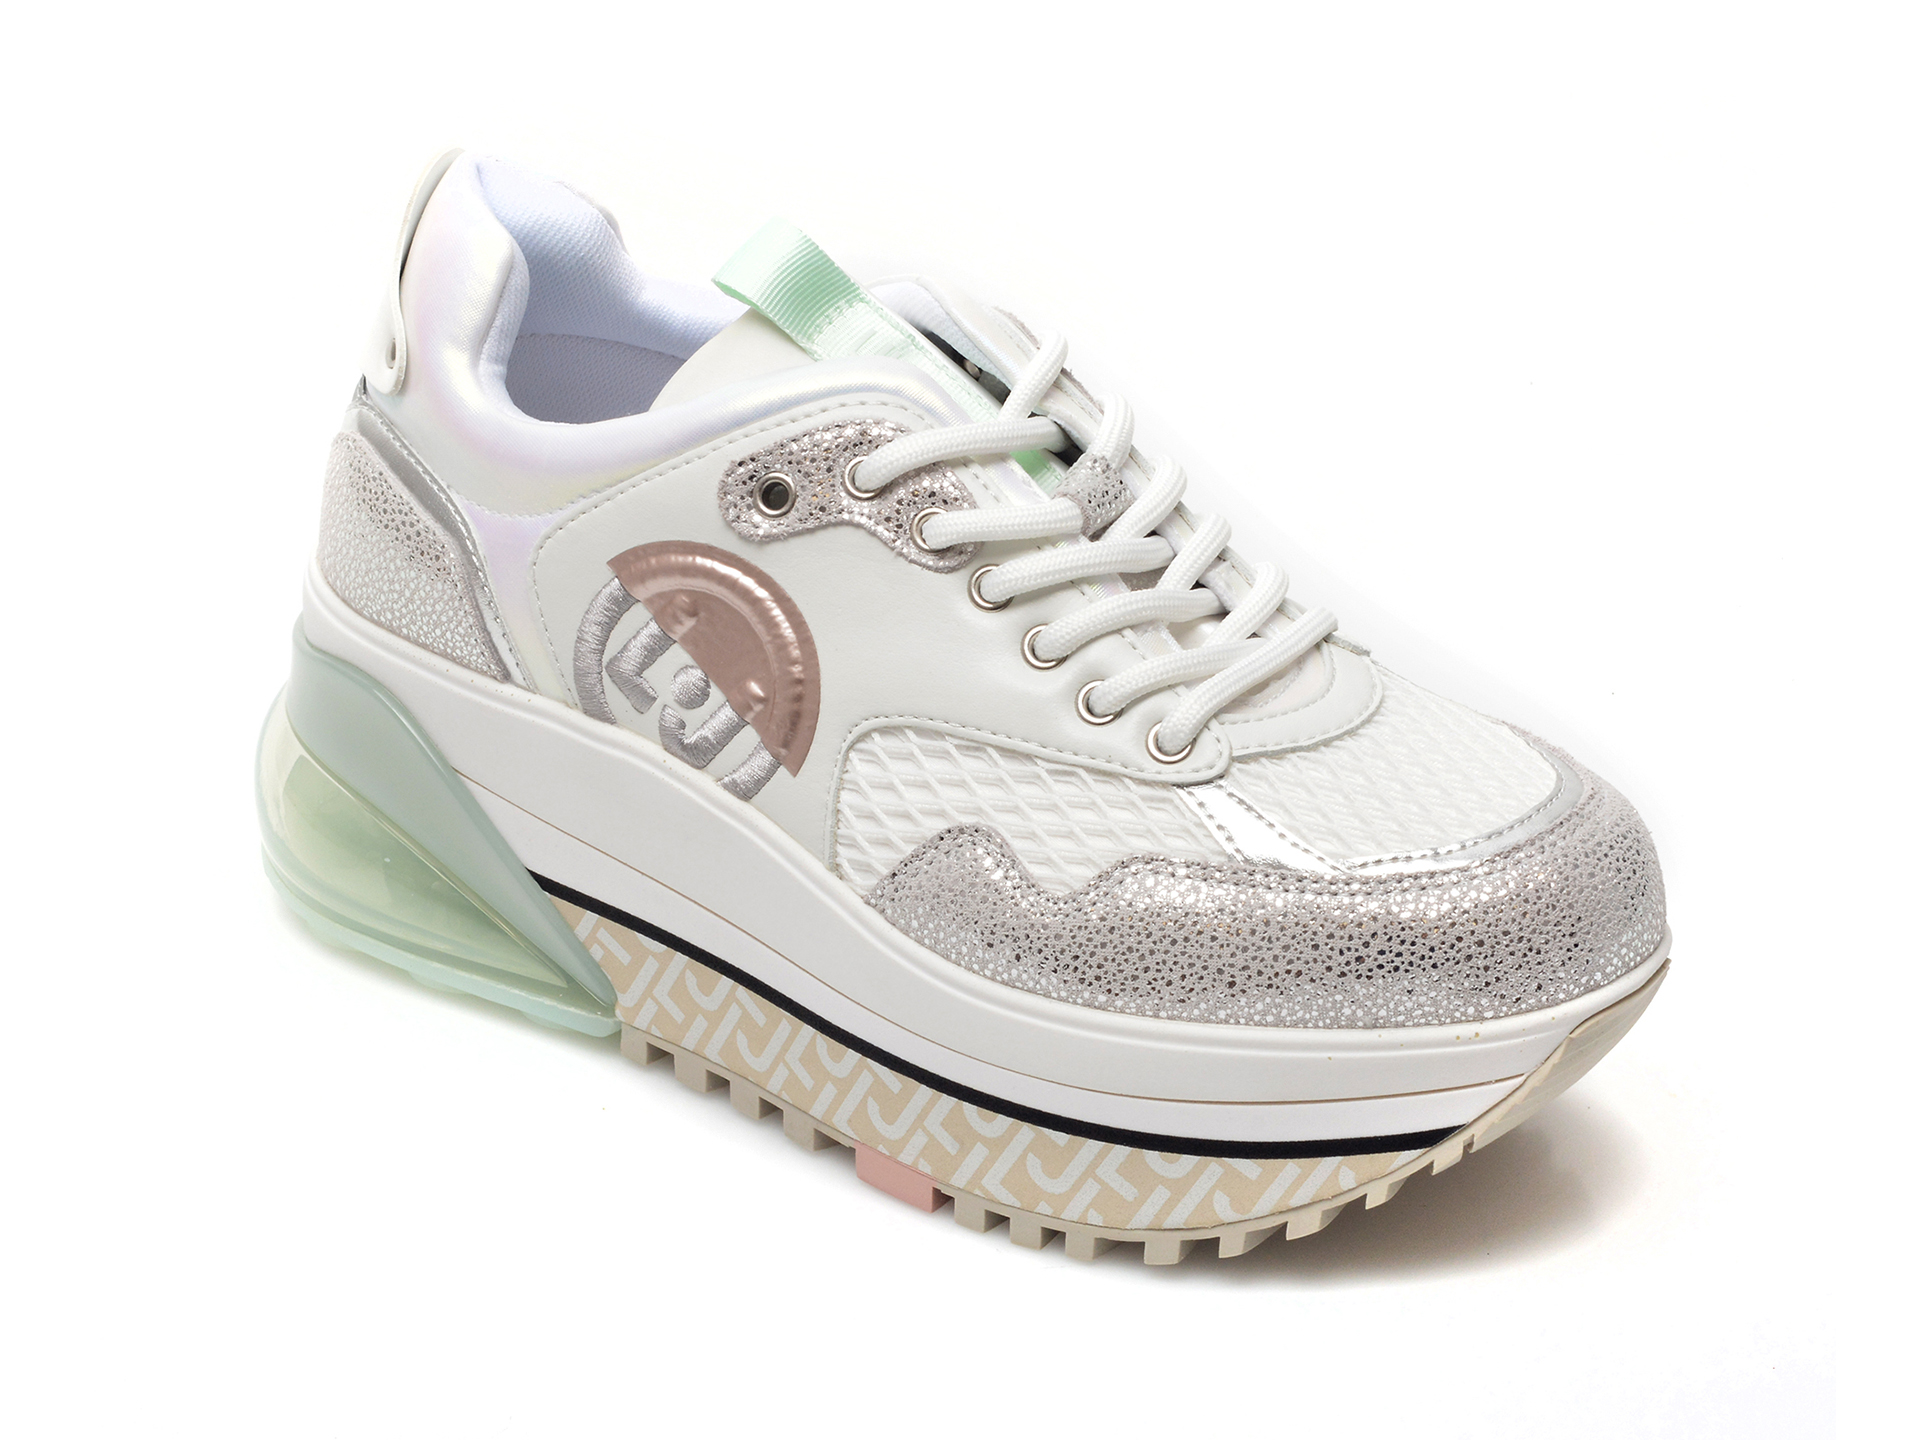 Pantofi sport LIU JO albi, MAXWOA2, din material textil si piele ecologica Liu Jo